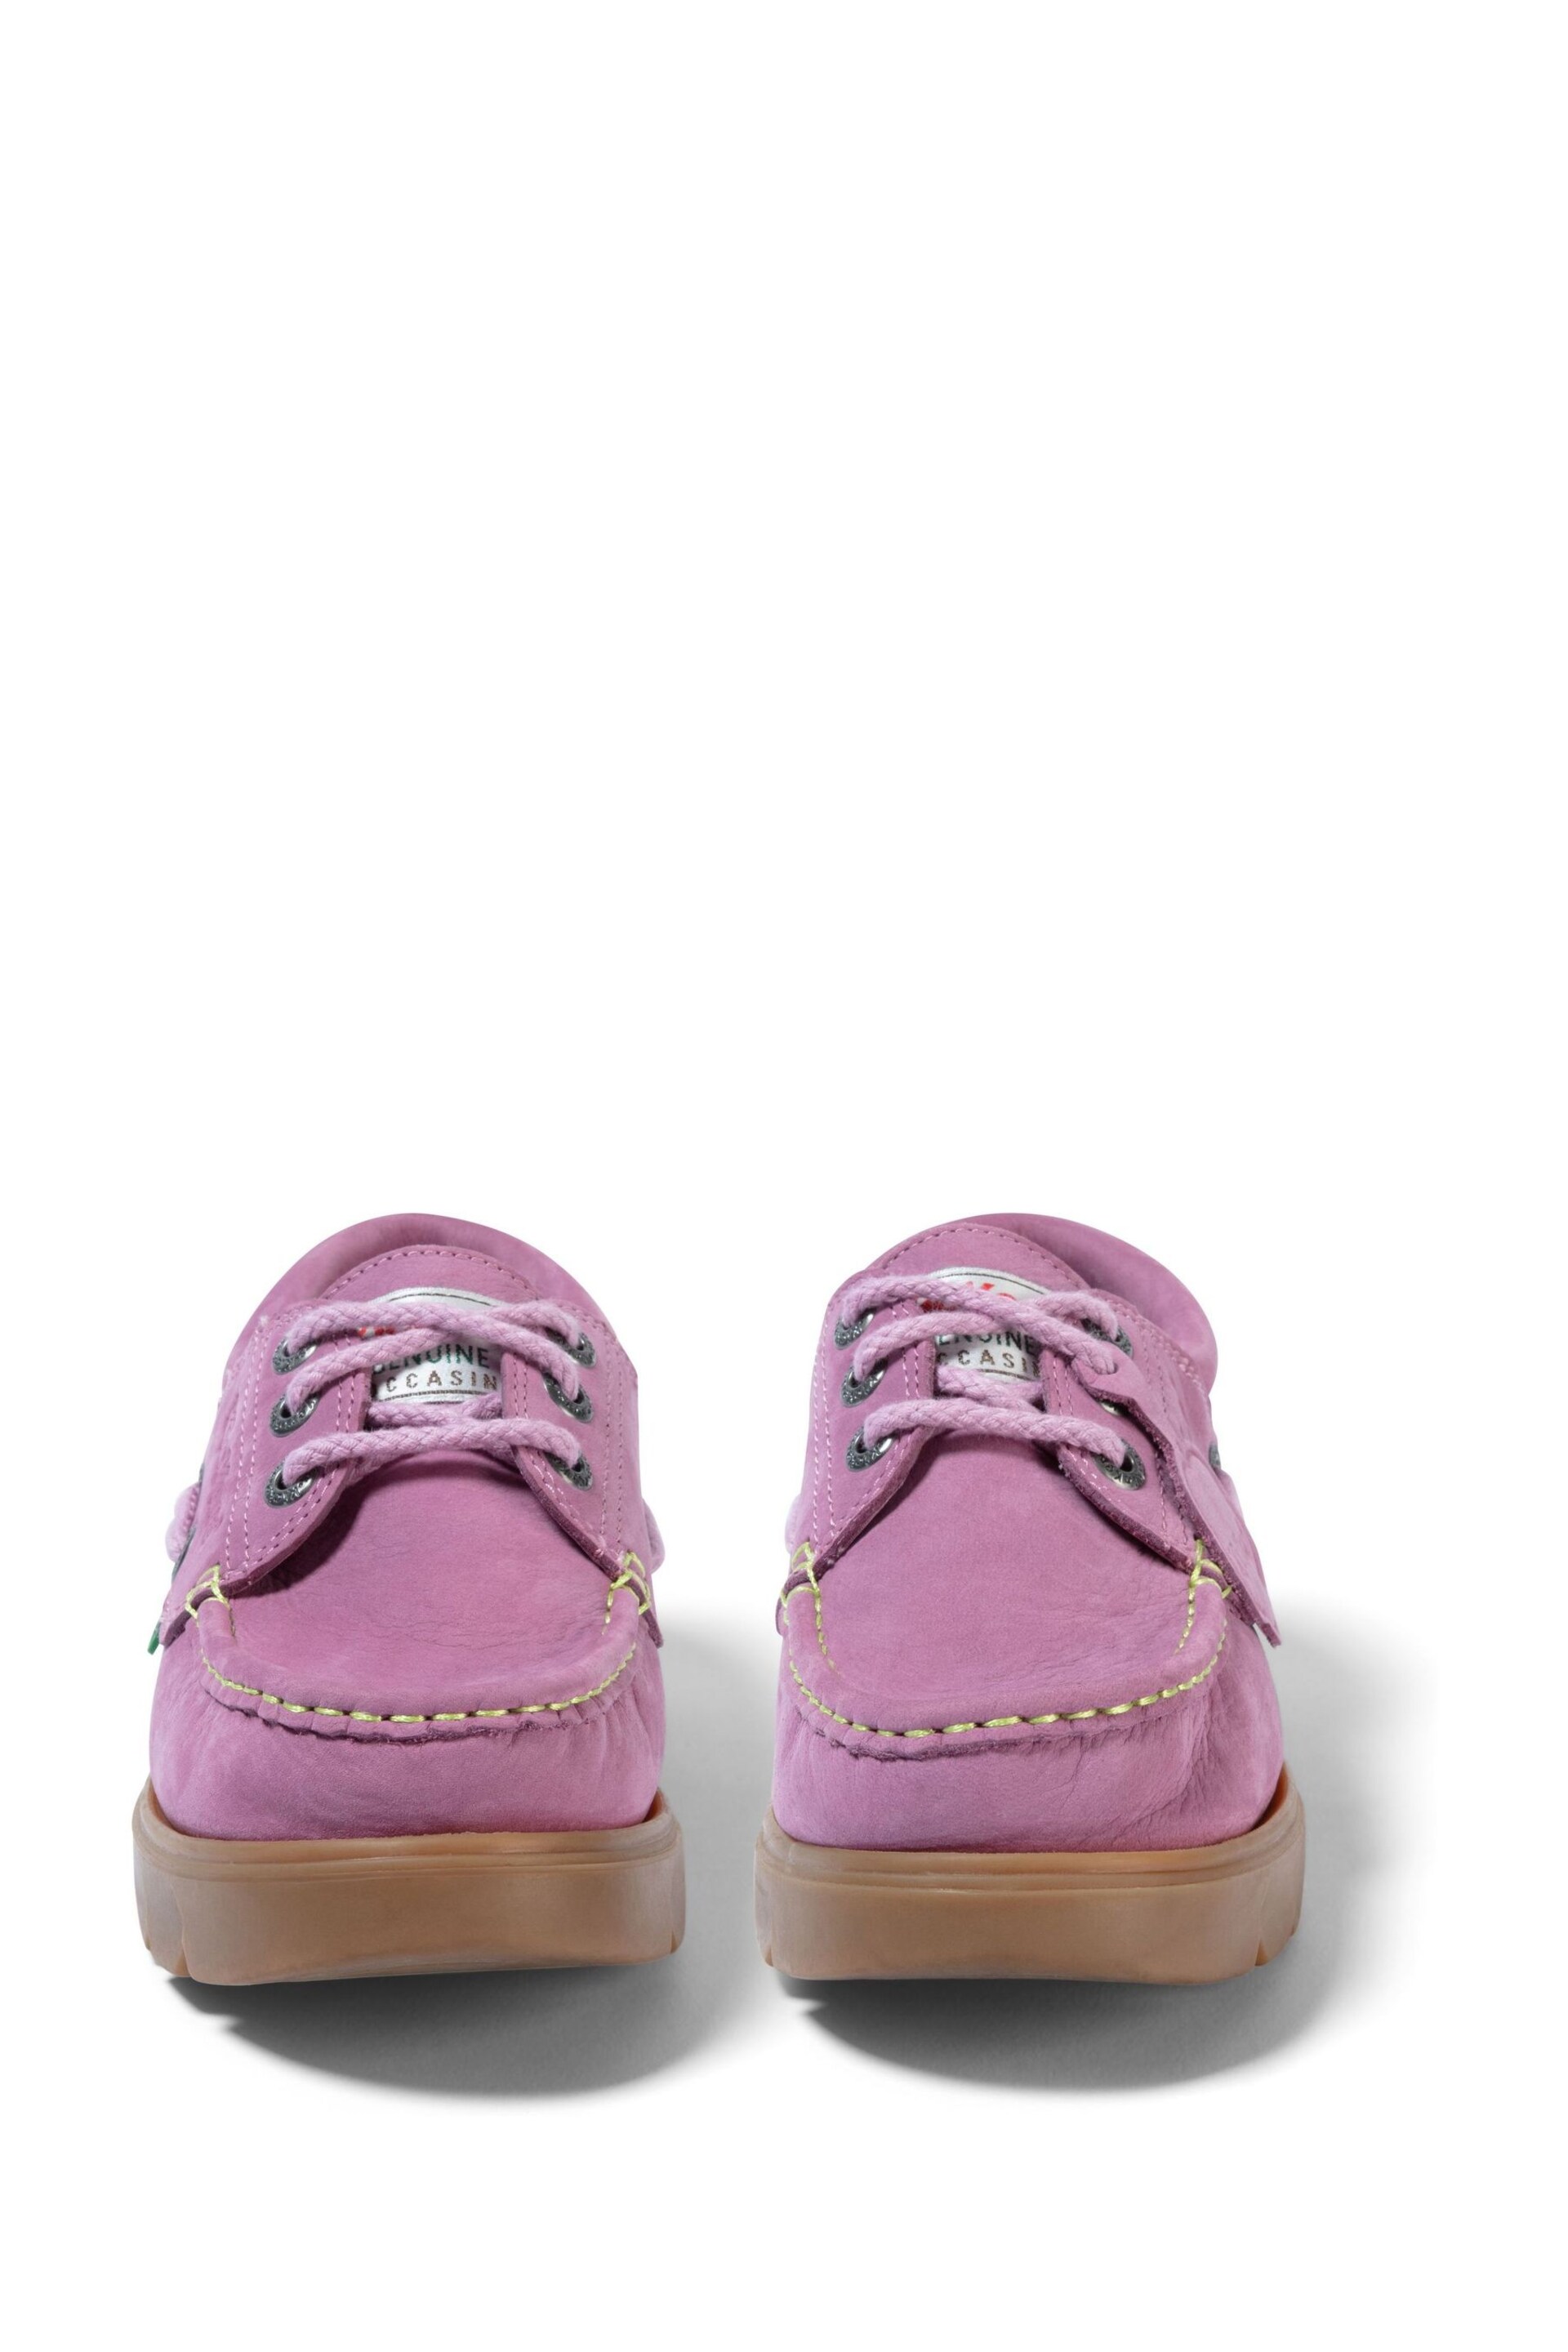 Kickers Purple Lennon Boat Shoes - Image 5 of 8